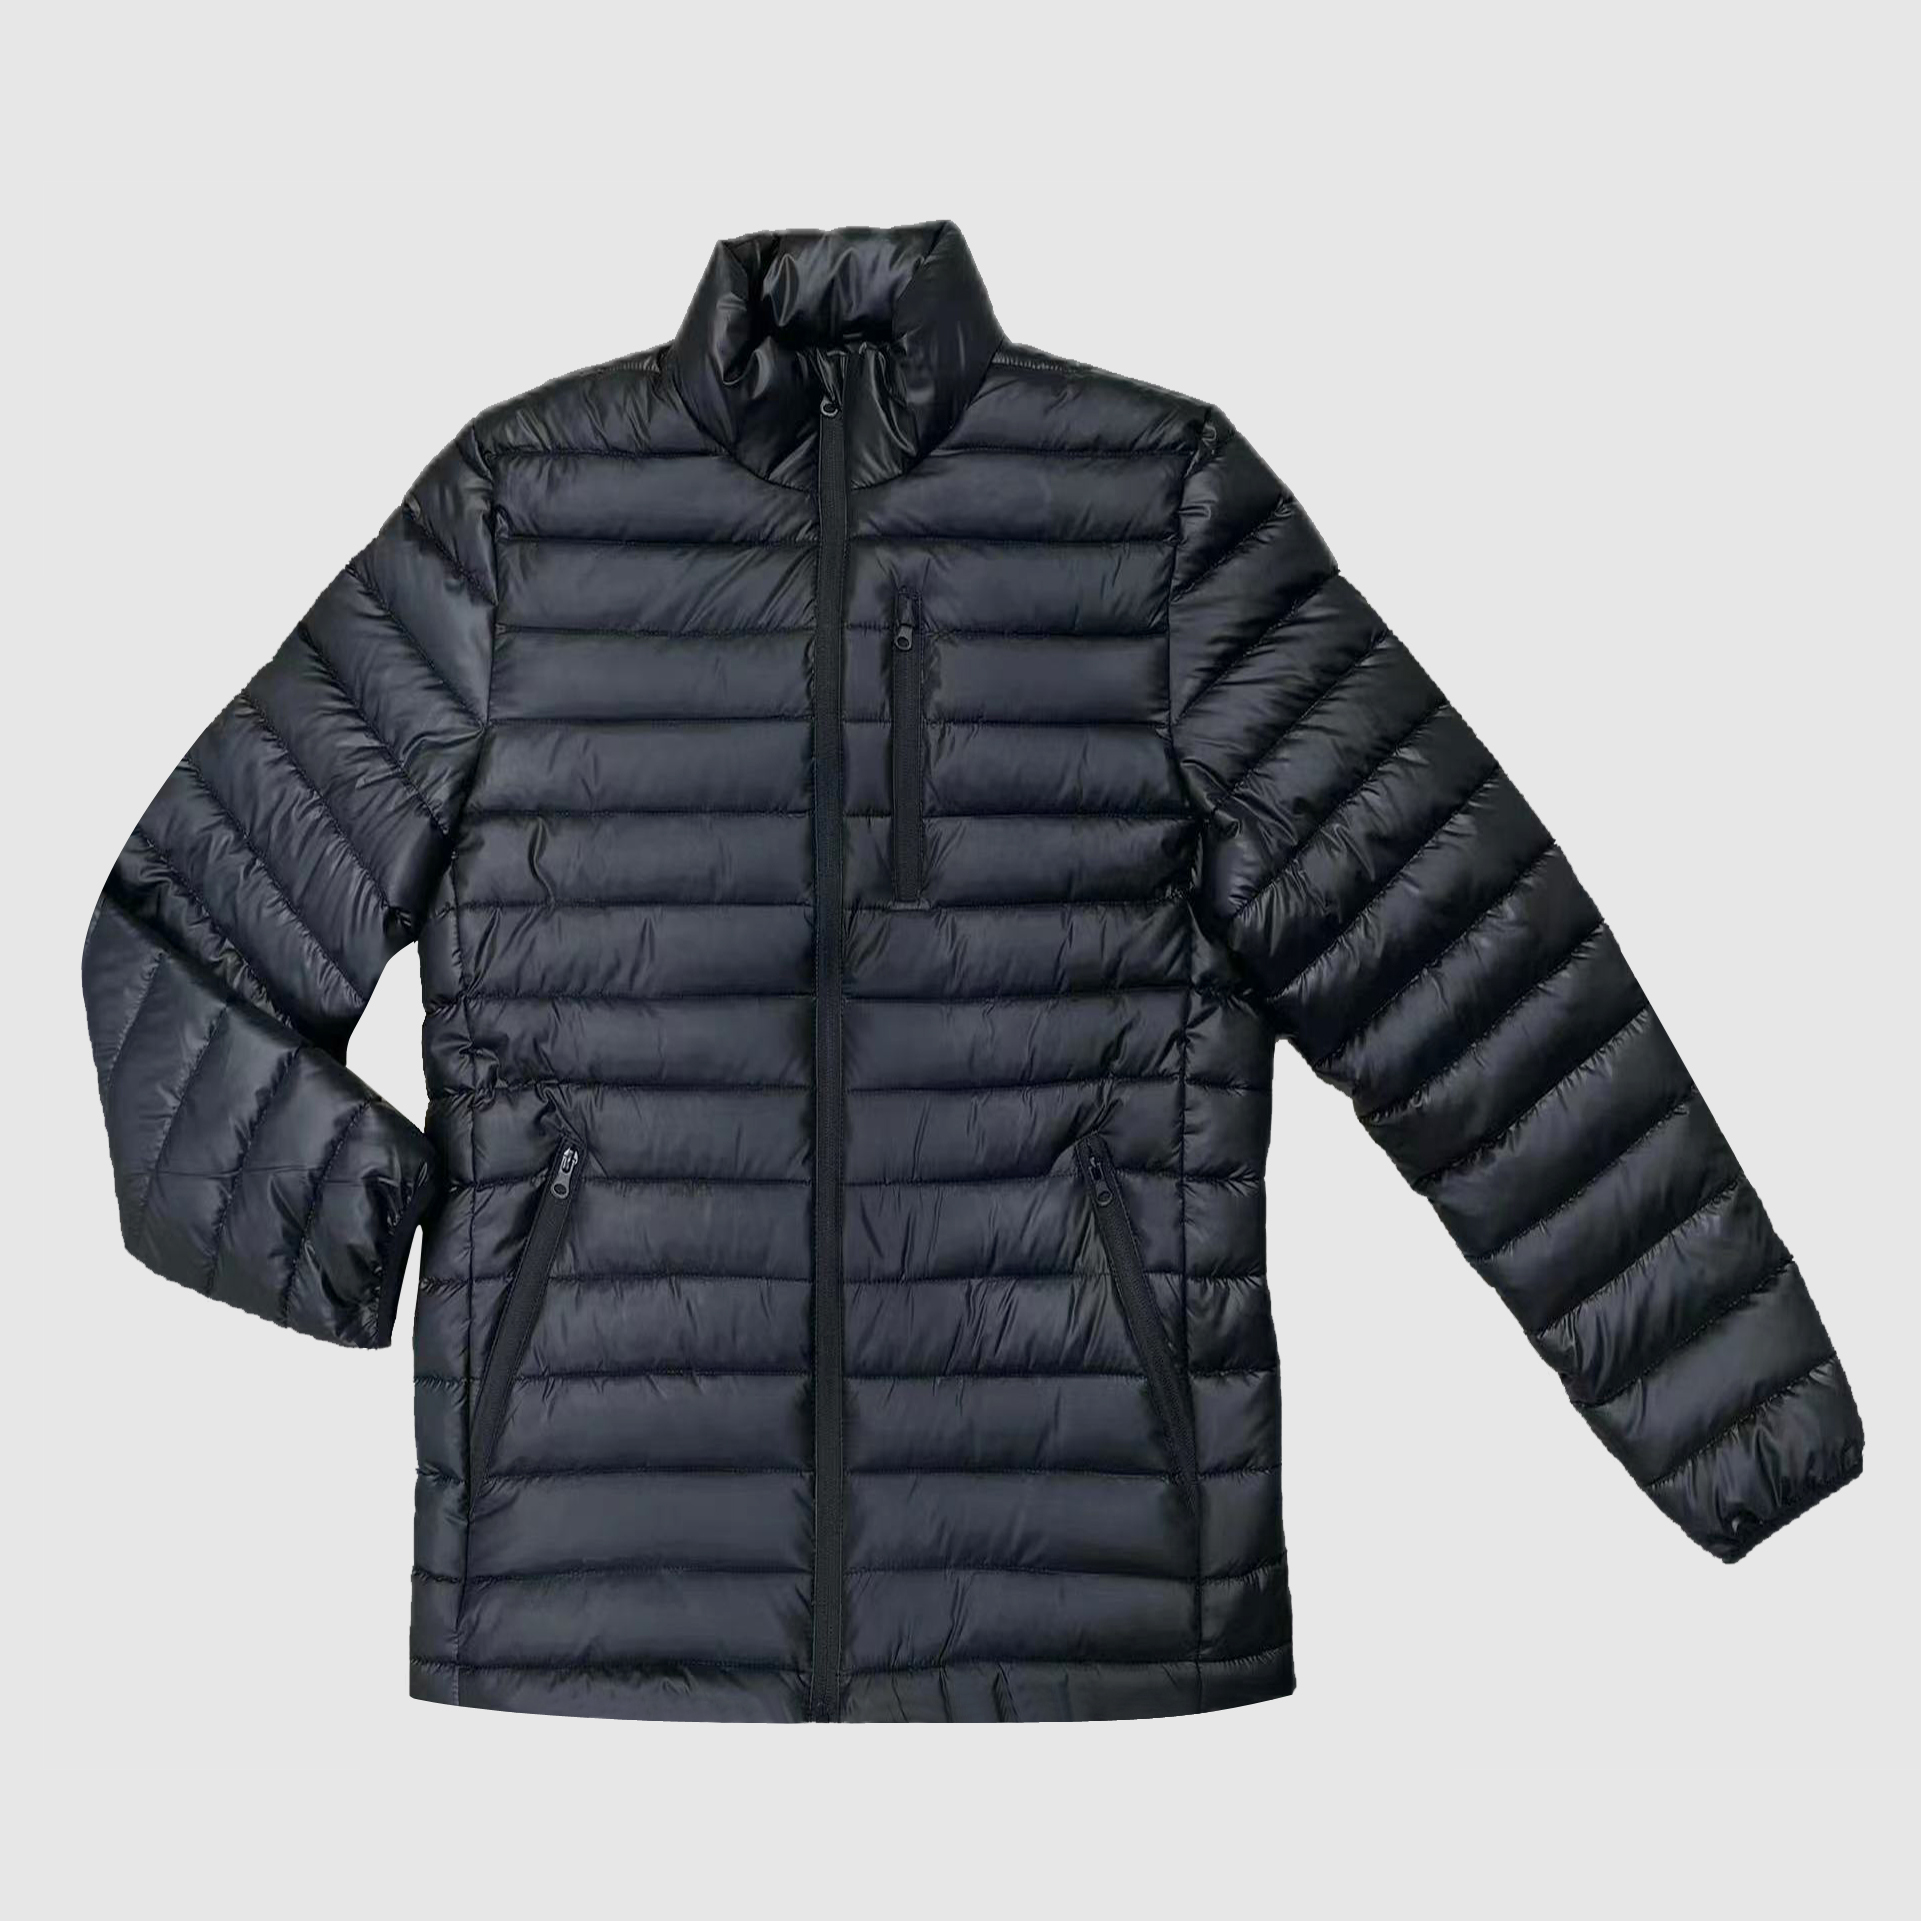 Discount Price Leather Jacket With Fur Sleeves -
 Men’s padding jacket – Senkai